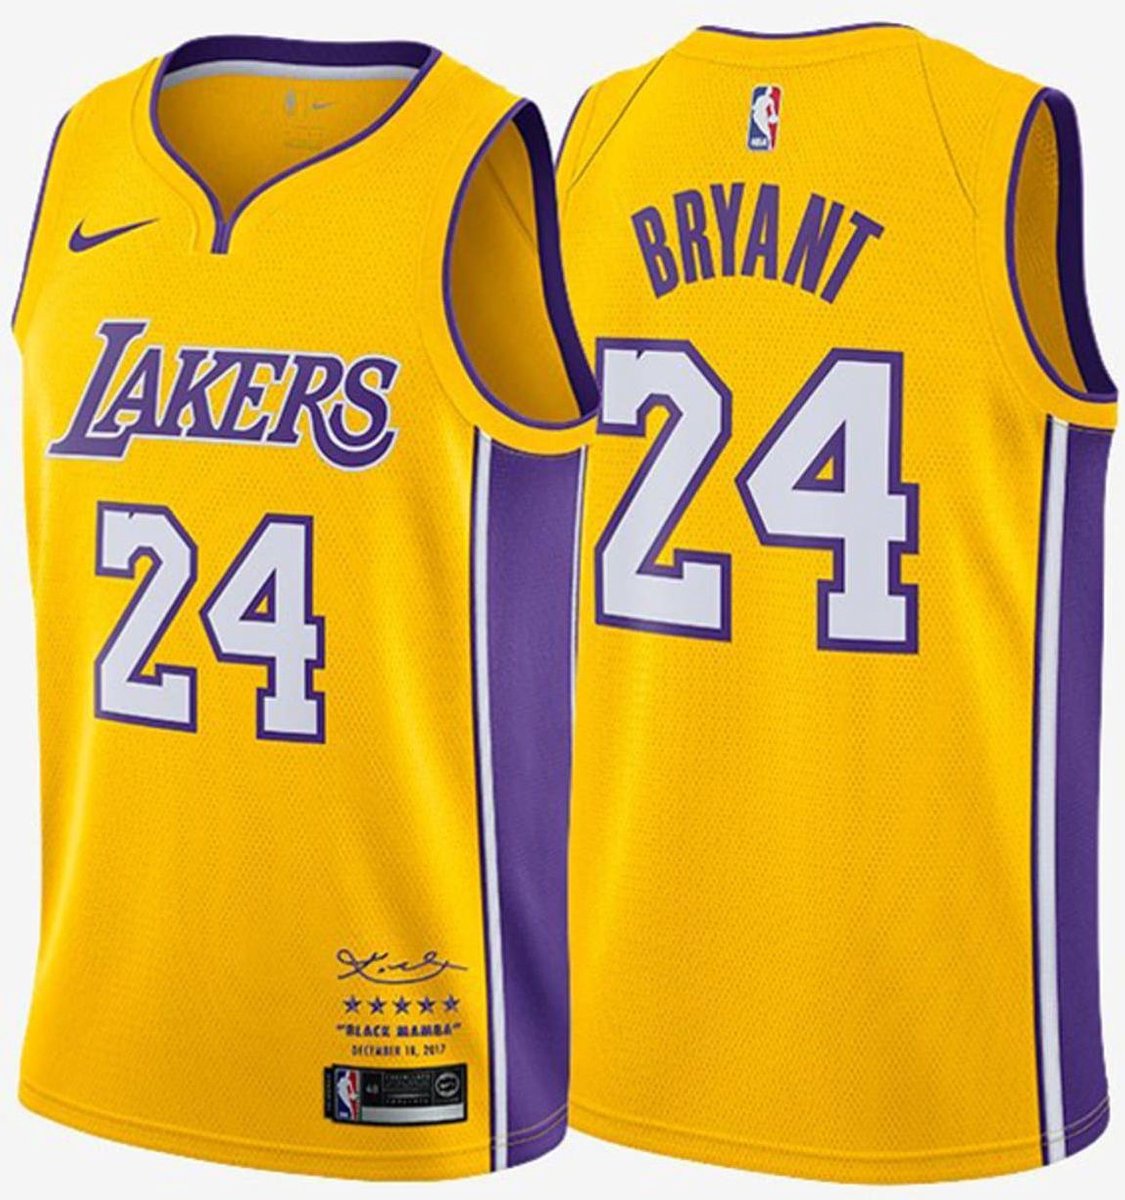 Voorzitter Hysterisch Vegetatie Lakers Kobe Bryant basketbal shirt | bol.com